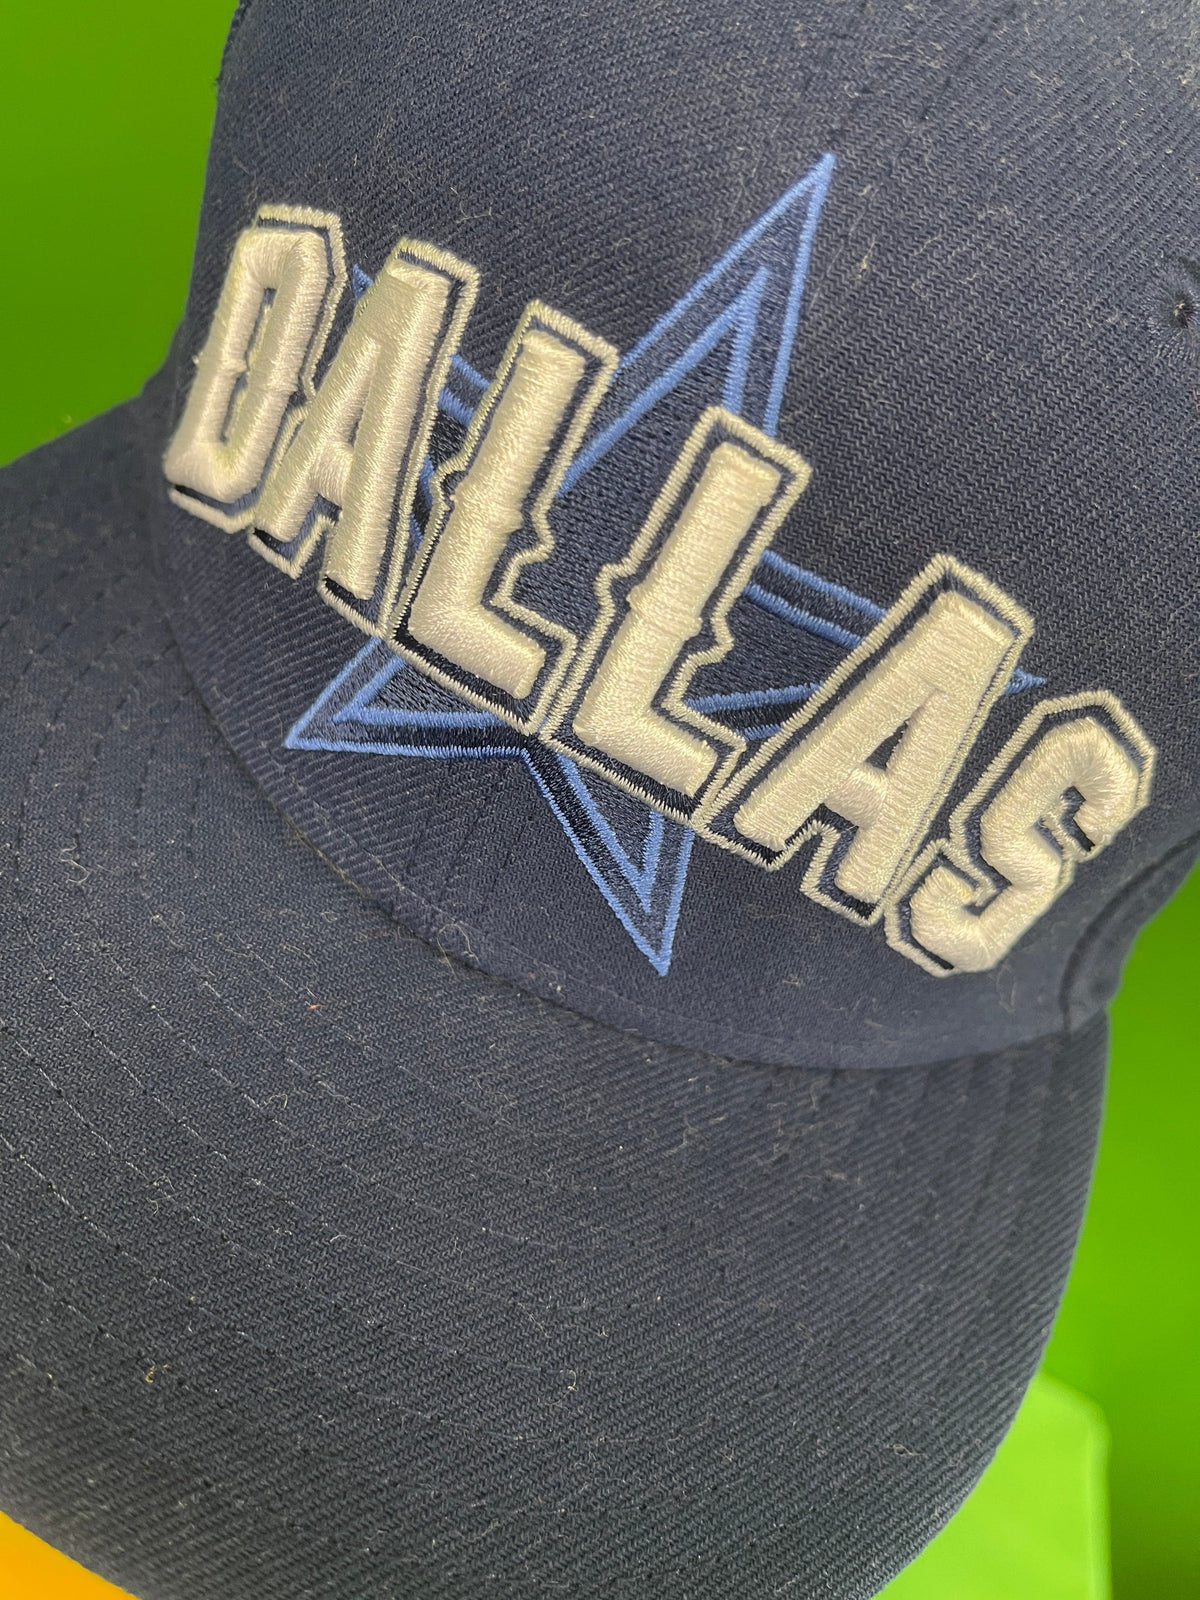 NFL Dallas Cowboys New Era 59FIFTY Cap/Hat Size 6-5/8 Youth